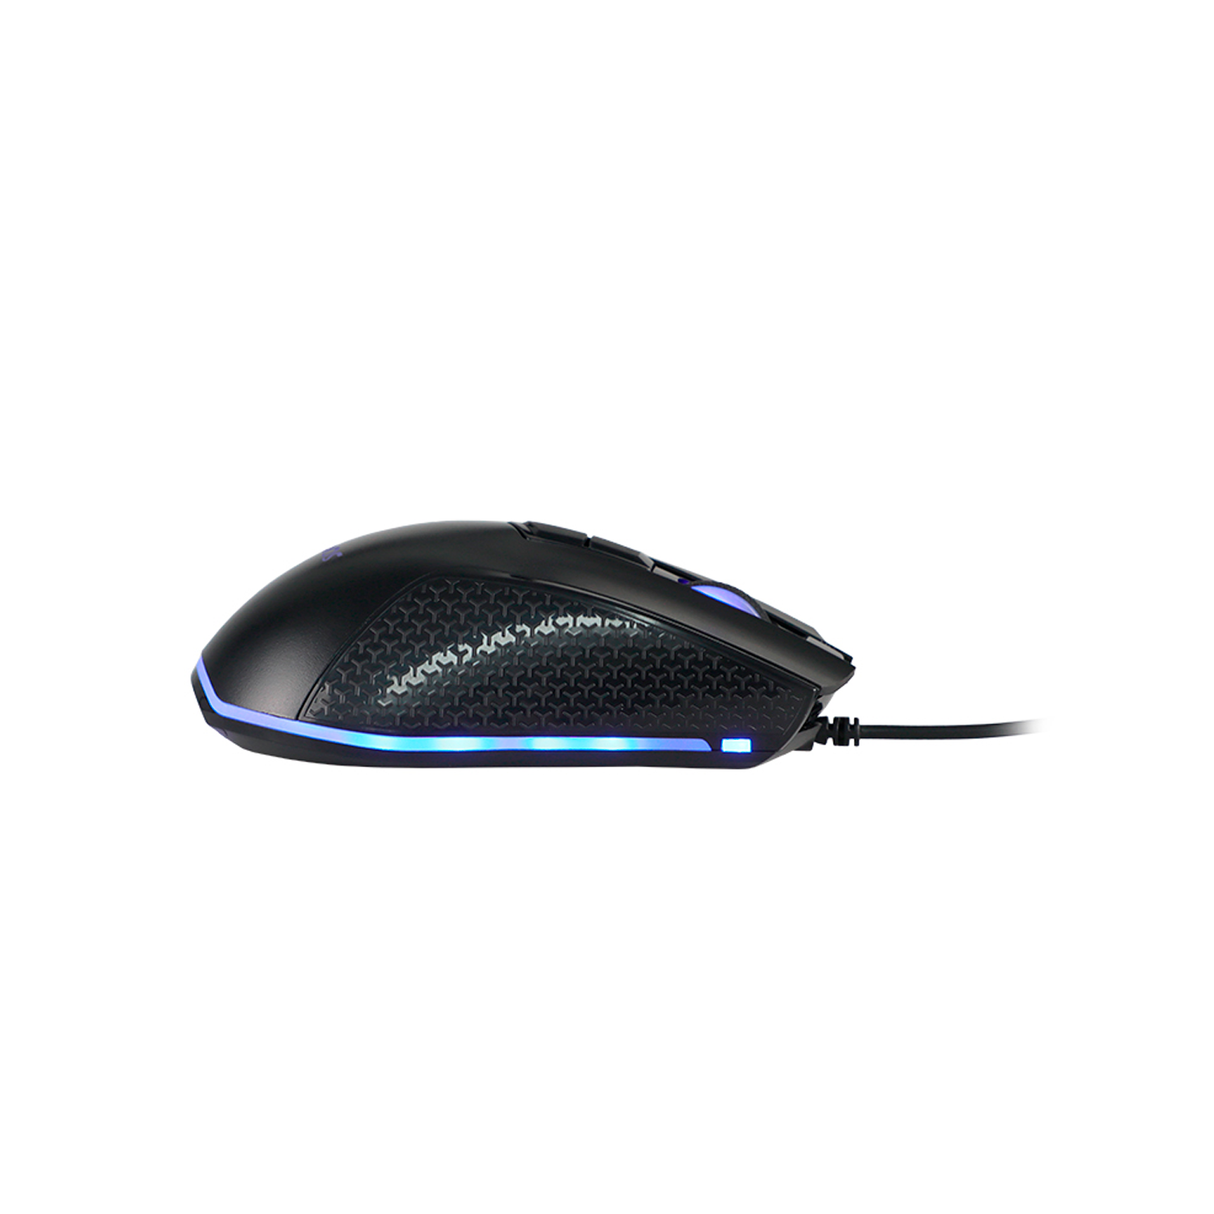 Mouse Gamer Teros TE 1211 USB BK